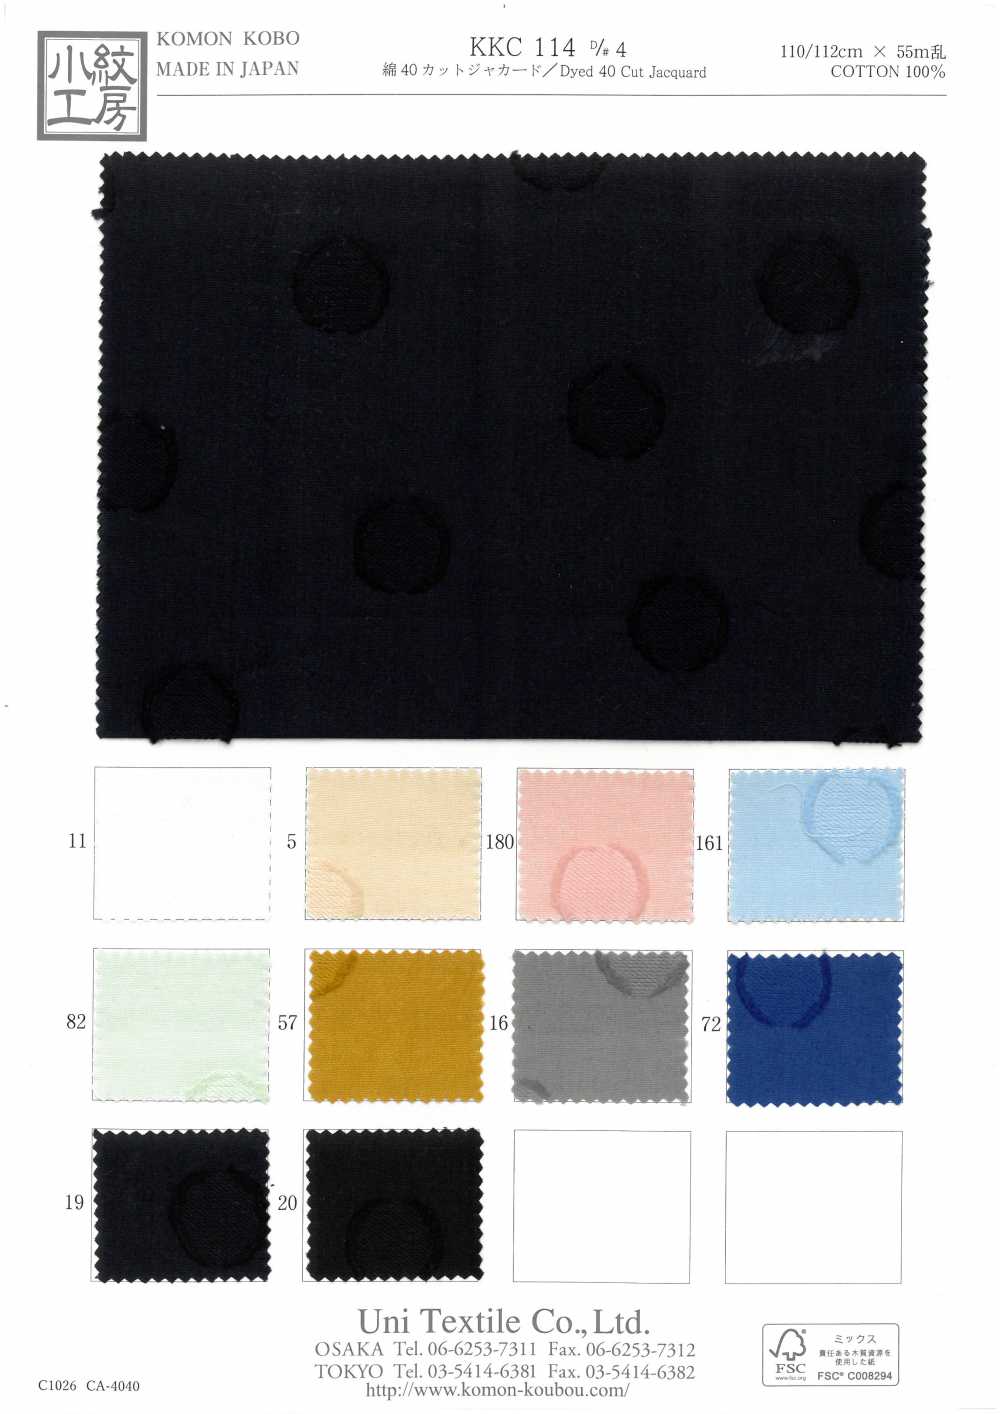 KKC114 D-4 40 Algodão Corte Jacquard[Têxtil / Tecido] Uni Textile